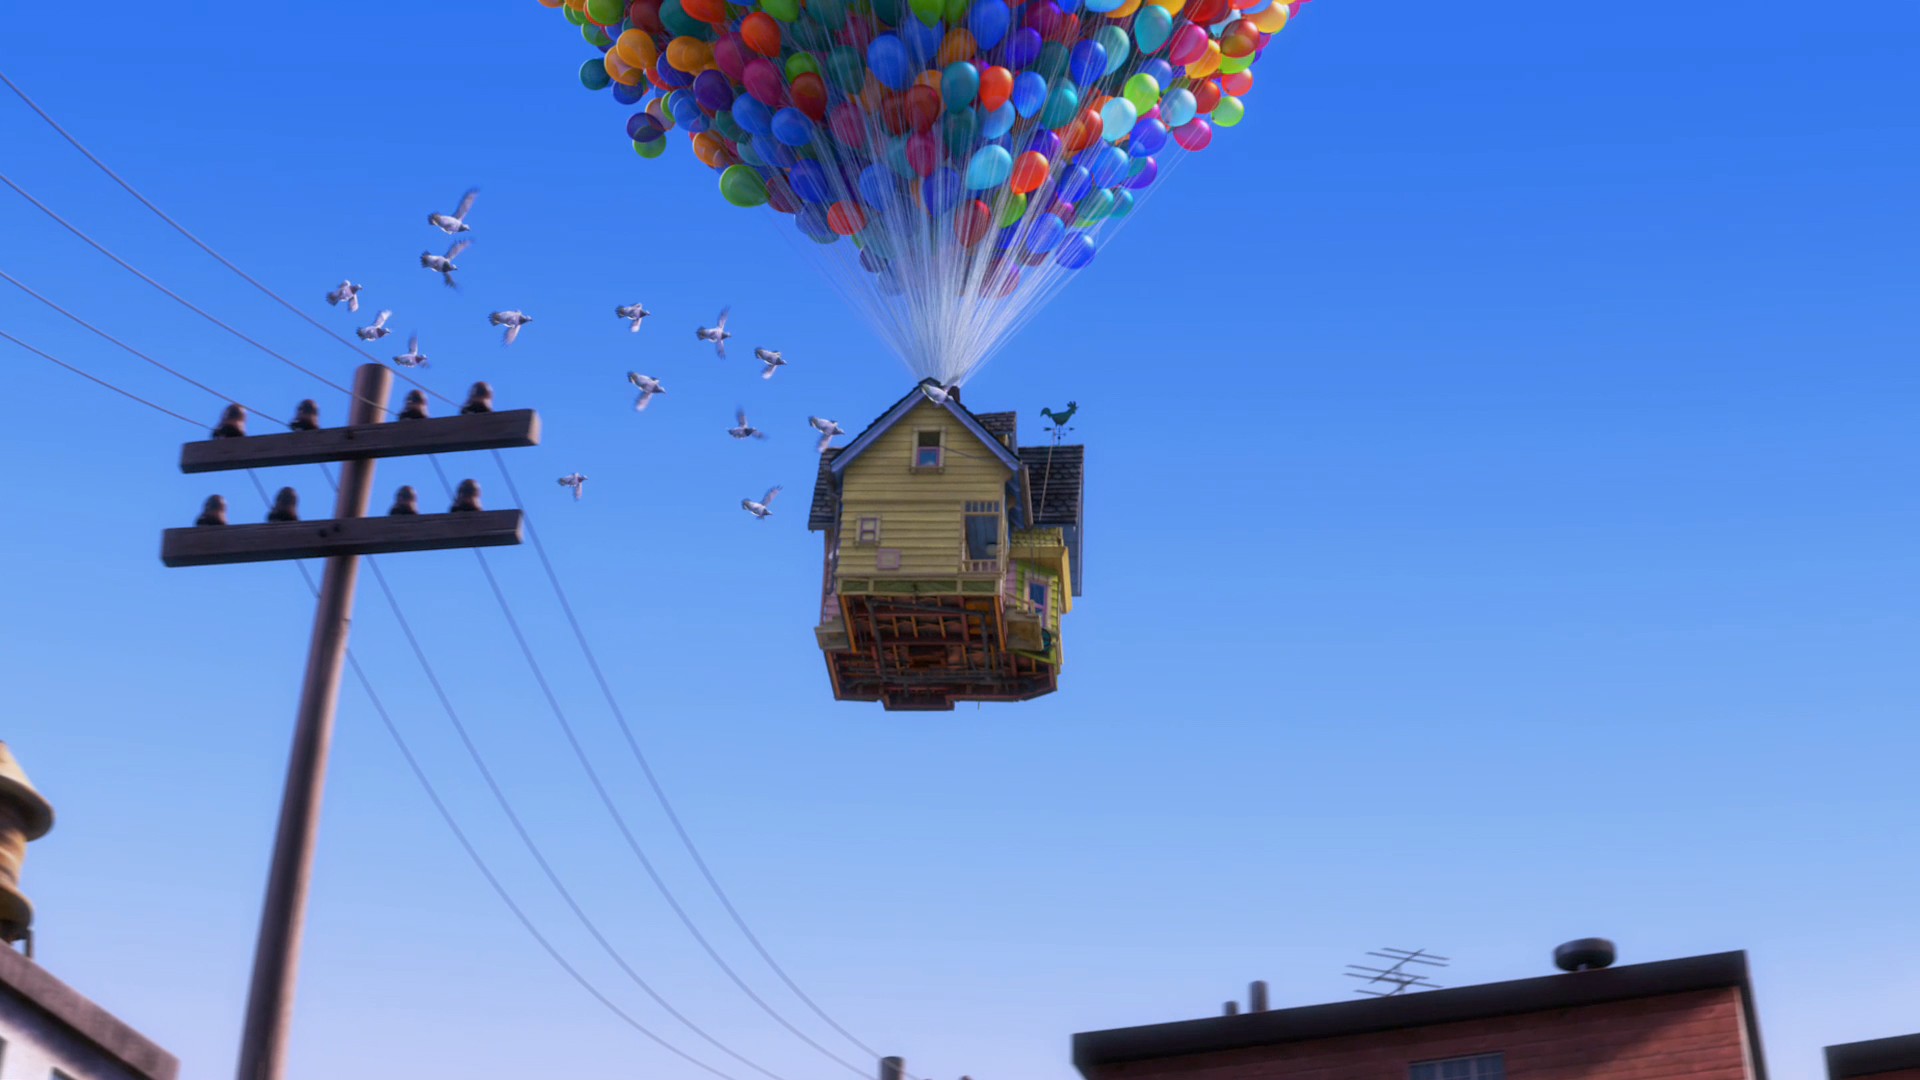 General 1920x1080 movies Pixar Animation Studios Up (movie) animated movies digital art